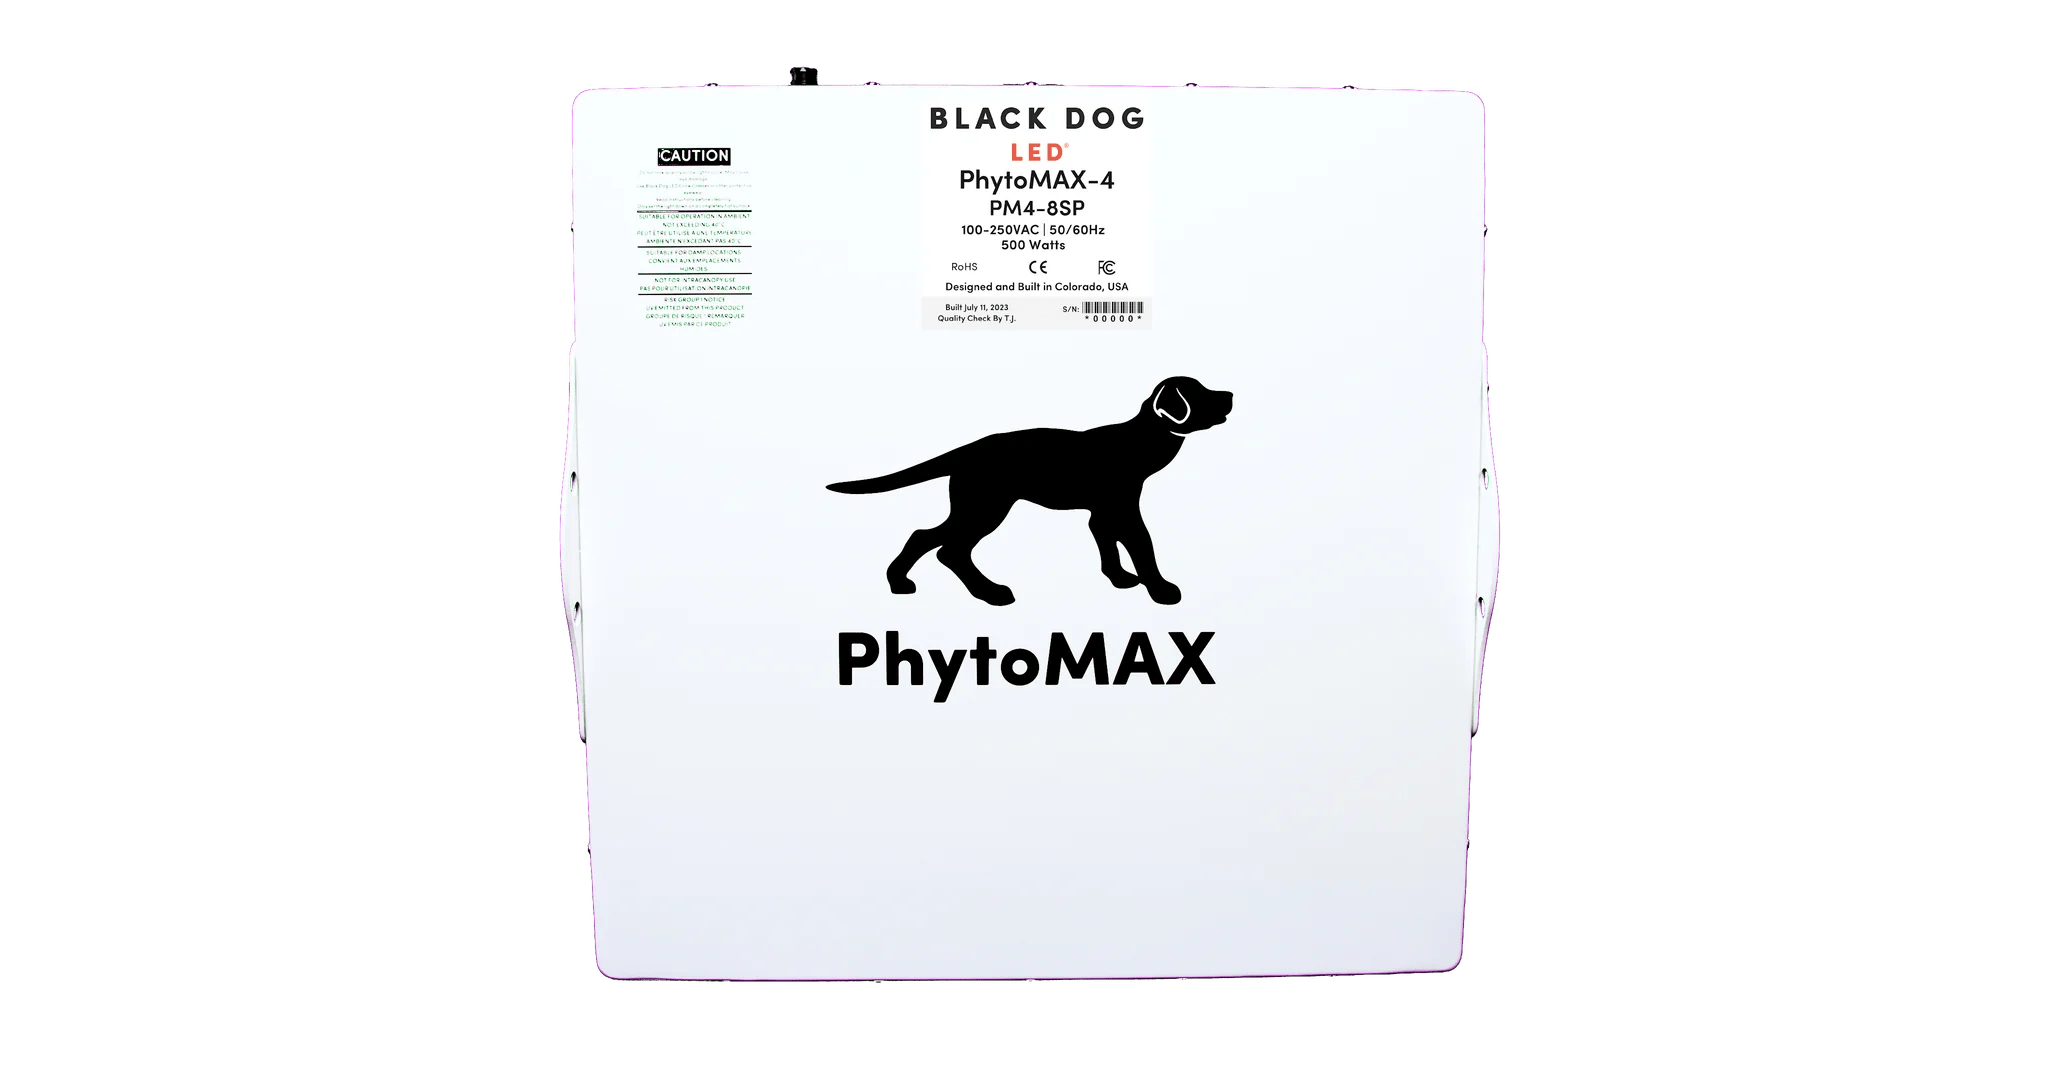 Black Dog PhytoMAX-4 8SP 500 Watt LED Grow Light - Green Thumb Depot